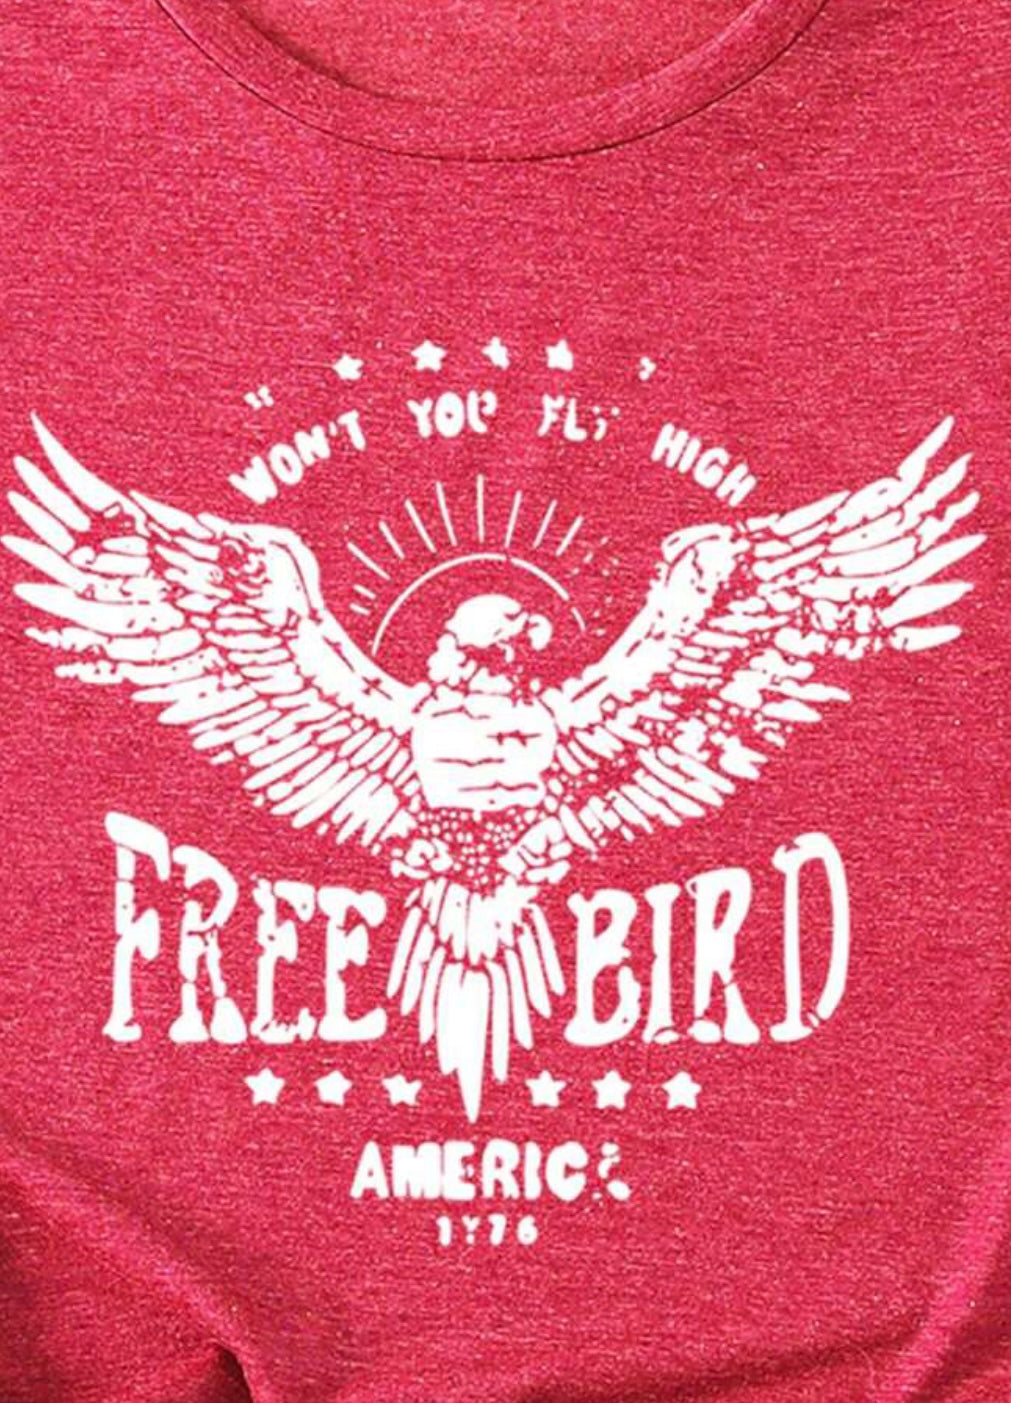 Red and White Free Bird America Graphic Tee